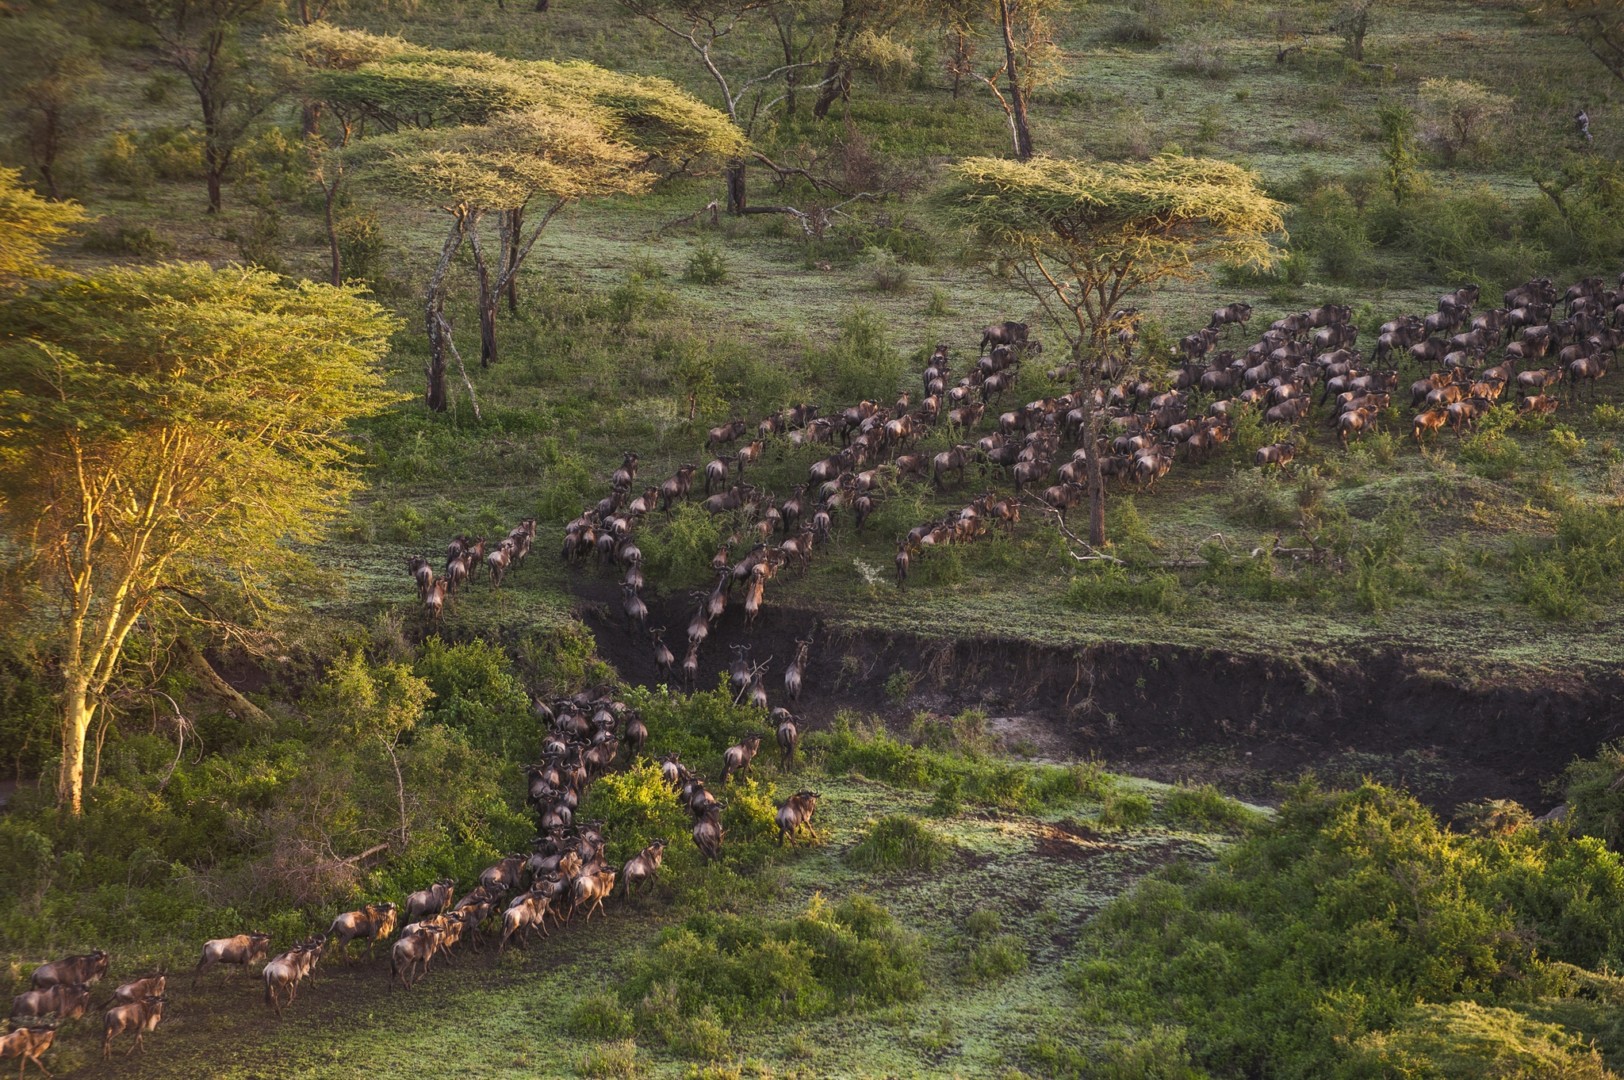 Migration western Serengeti